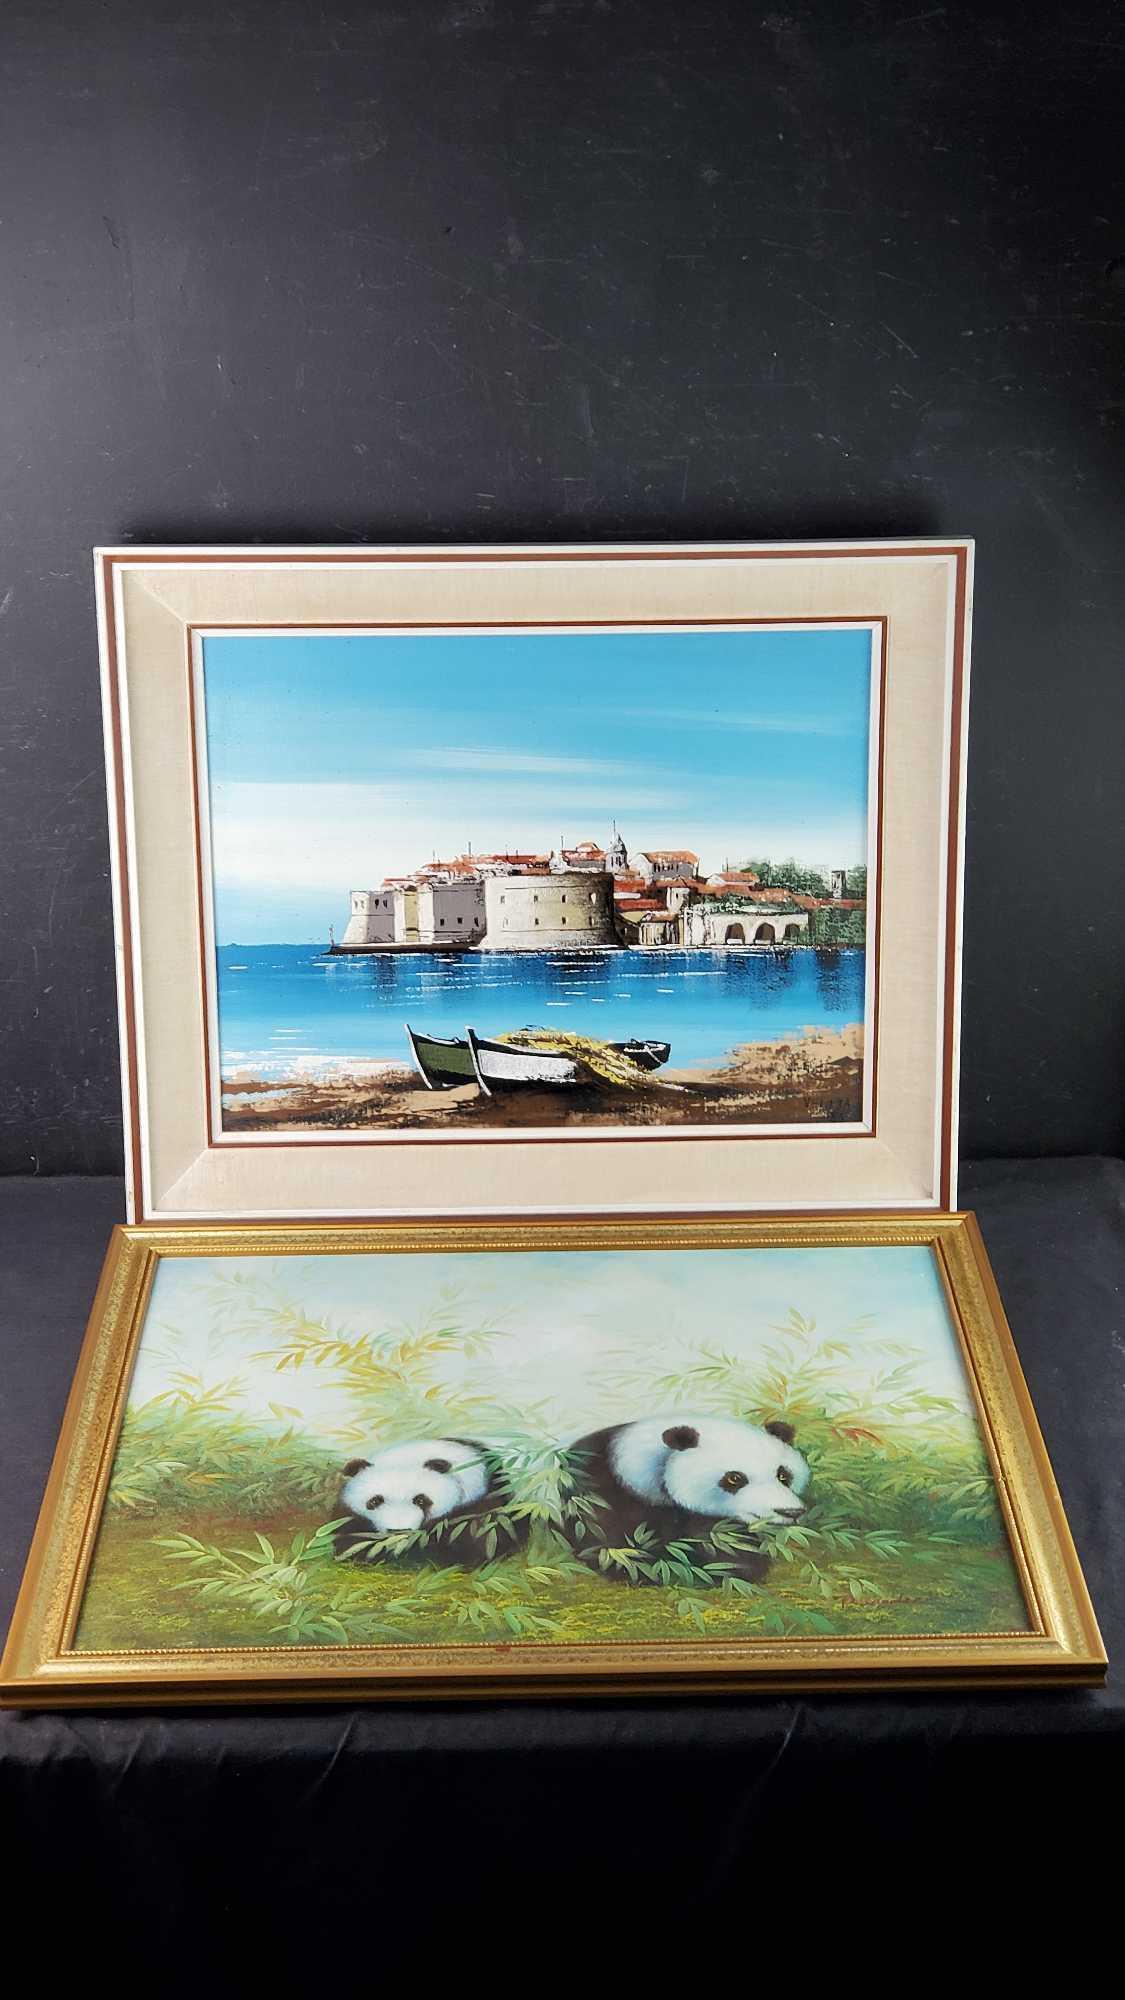 2 Framed oil/canvas artwork pieces with signatures Seascape Vellia Pandas P. Sanders